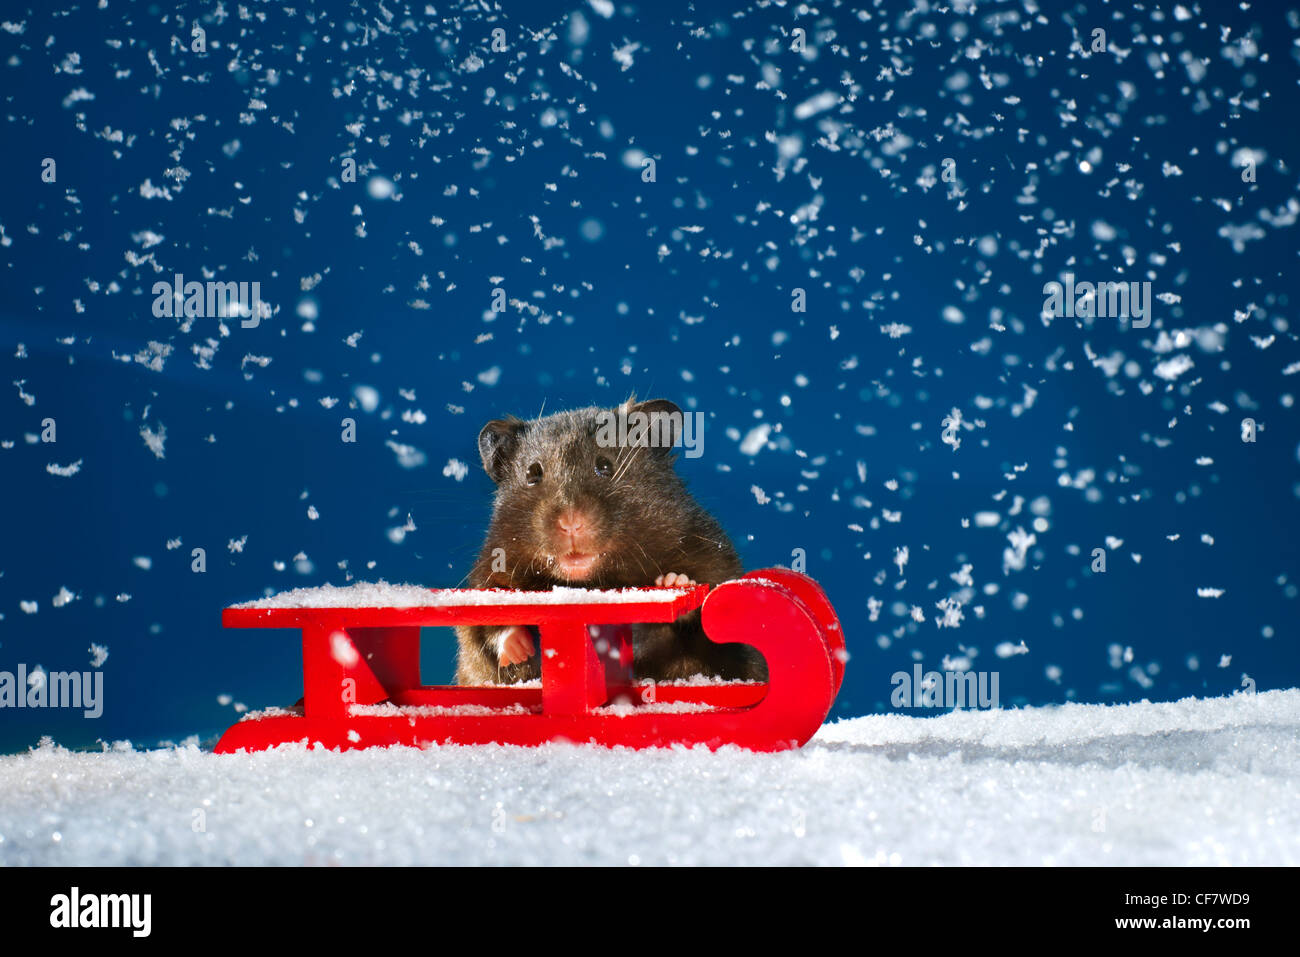 Inverno studio criceto snow ice ghiacciate nevoso sleigh-riding sleigh cavalcare slittino slitta slittino divertente funny rosso blu nevicata xmas chris Foto Stock